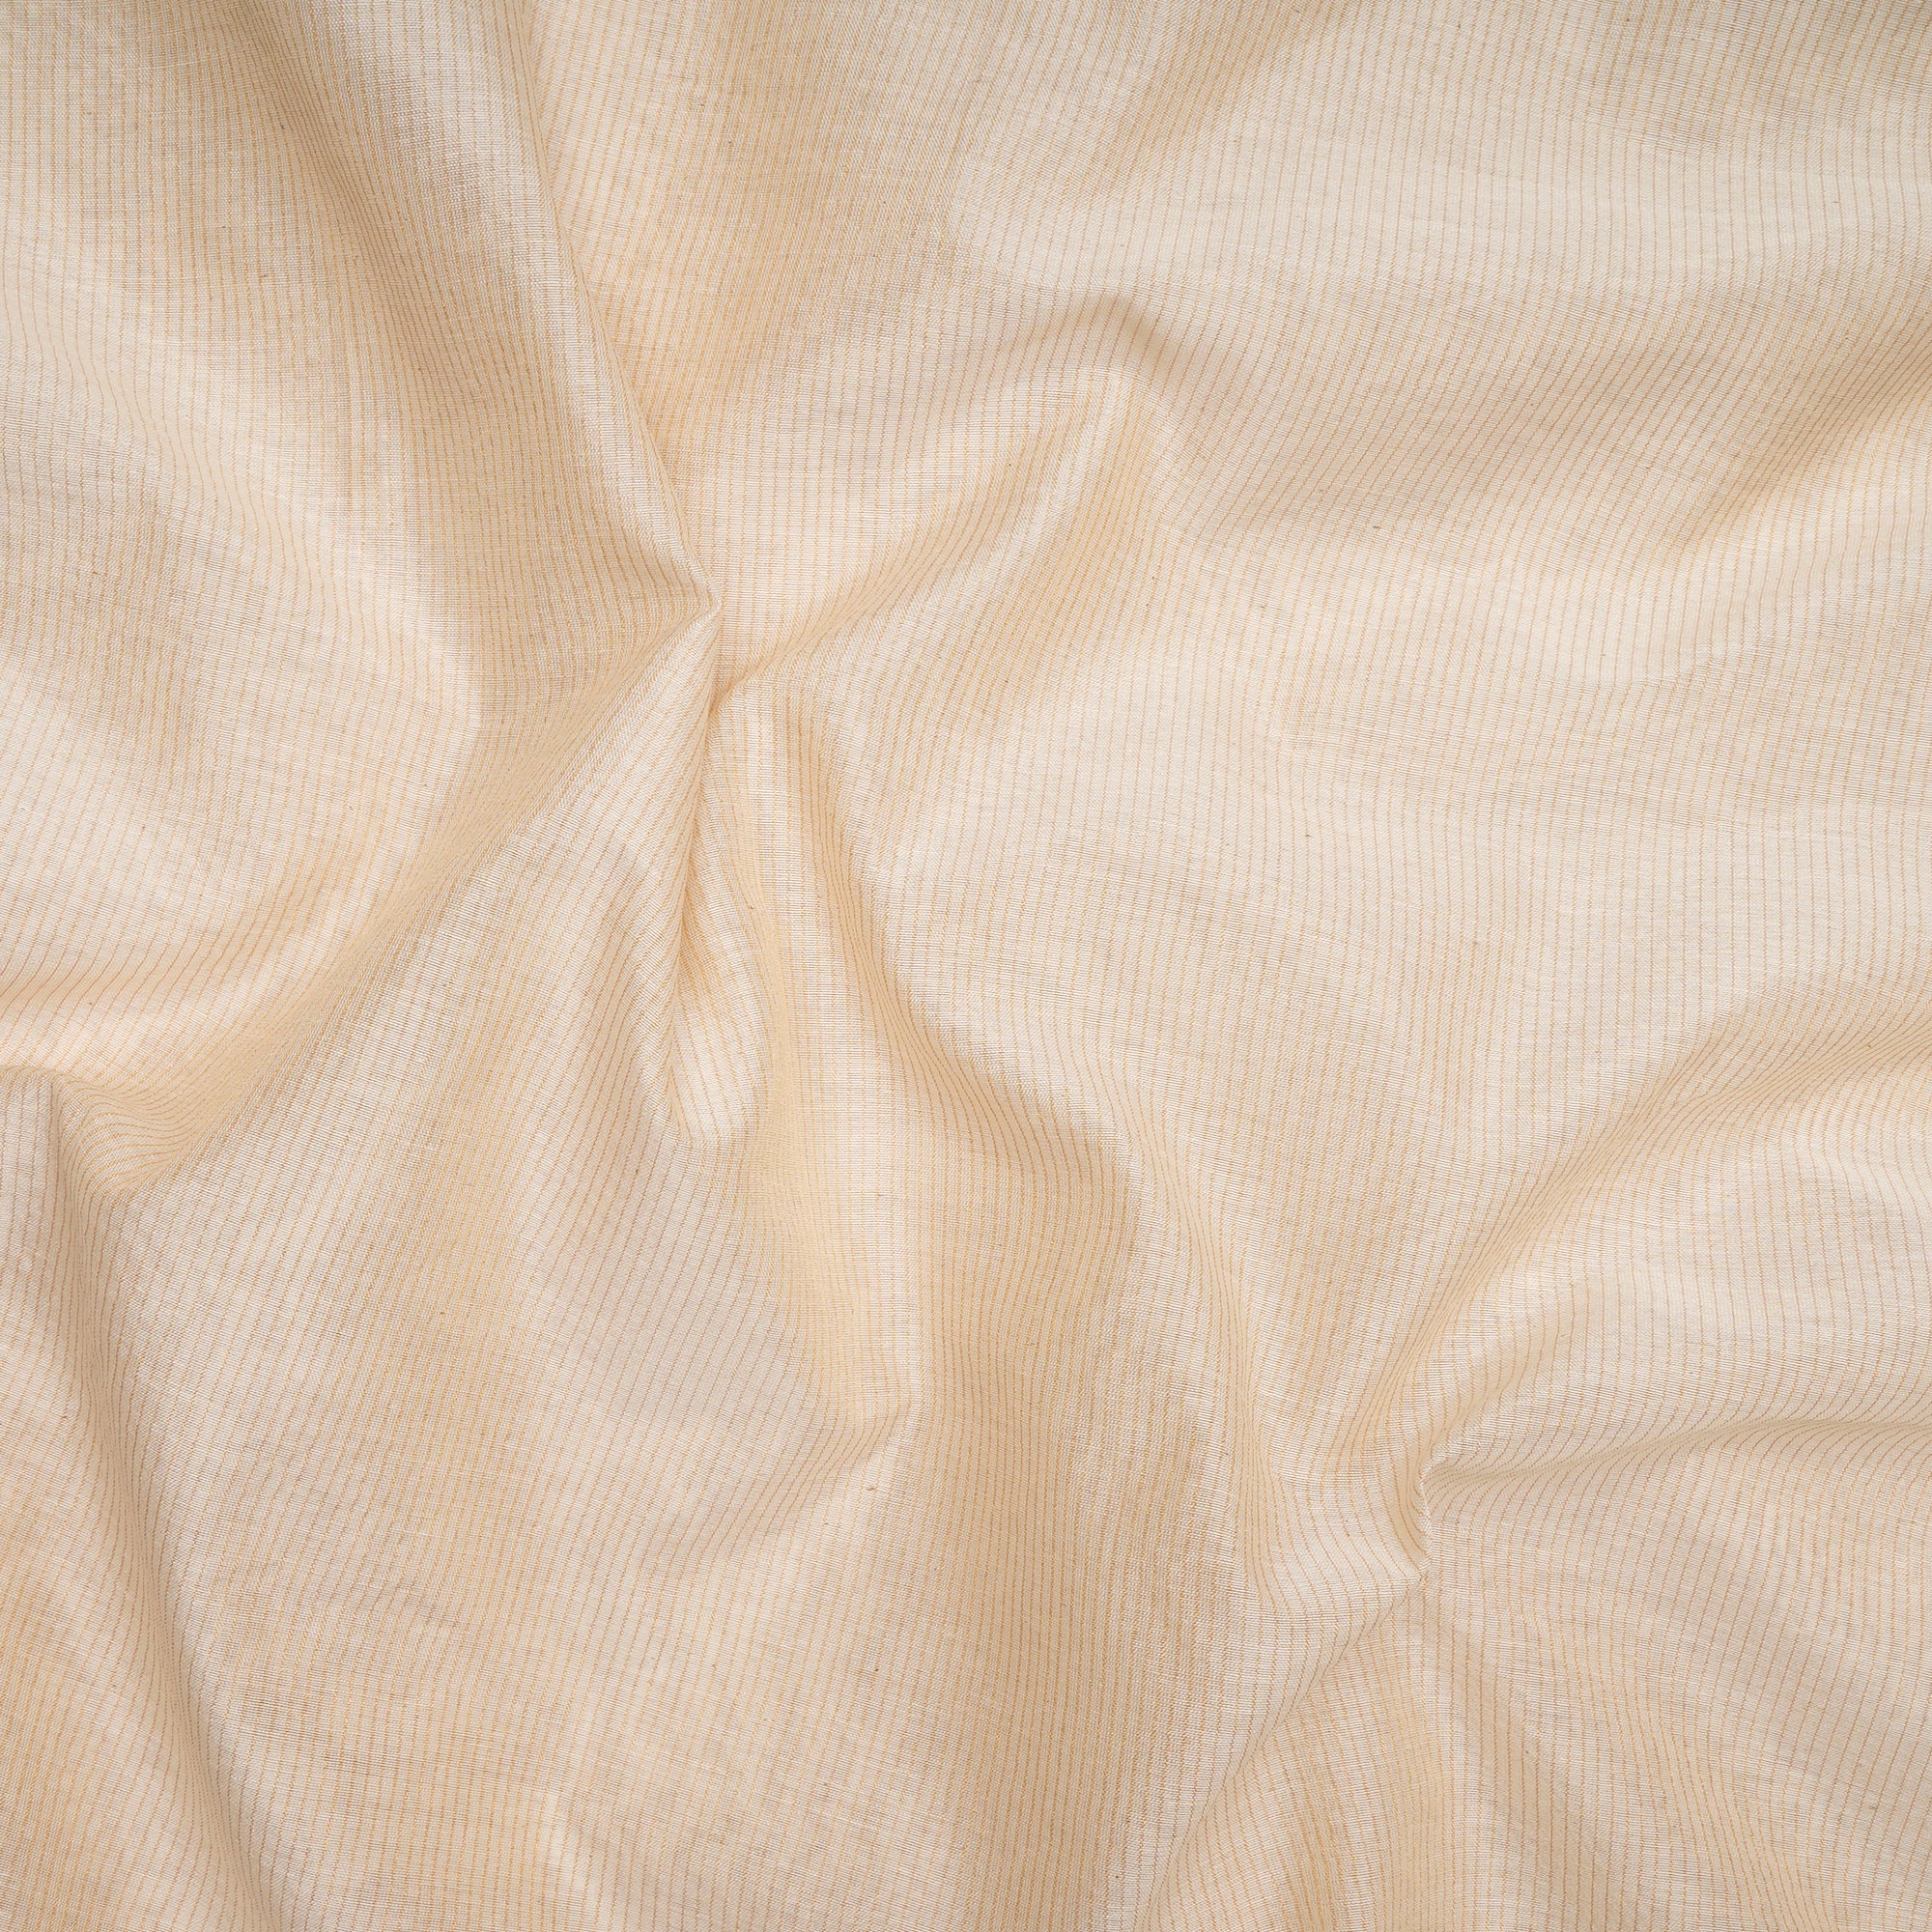 Off White Dyeable Fancy Banarasi Cotton Silk Fabric